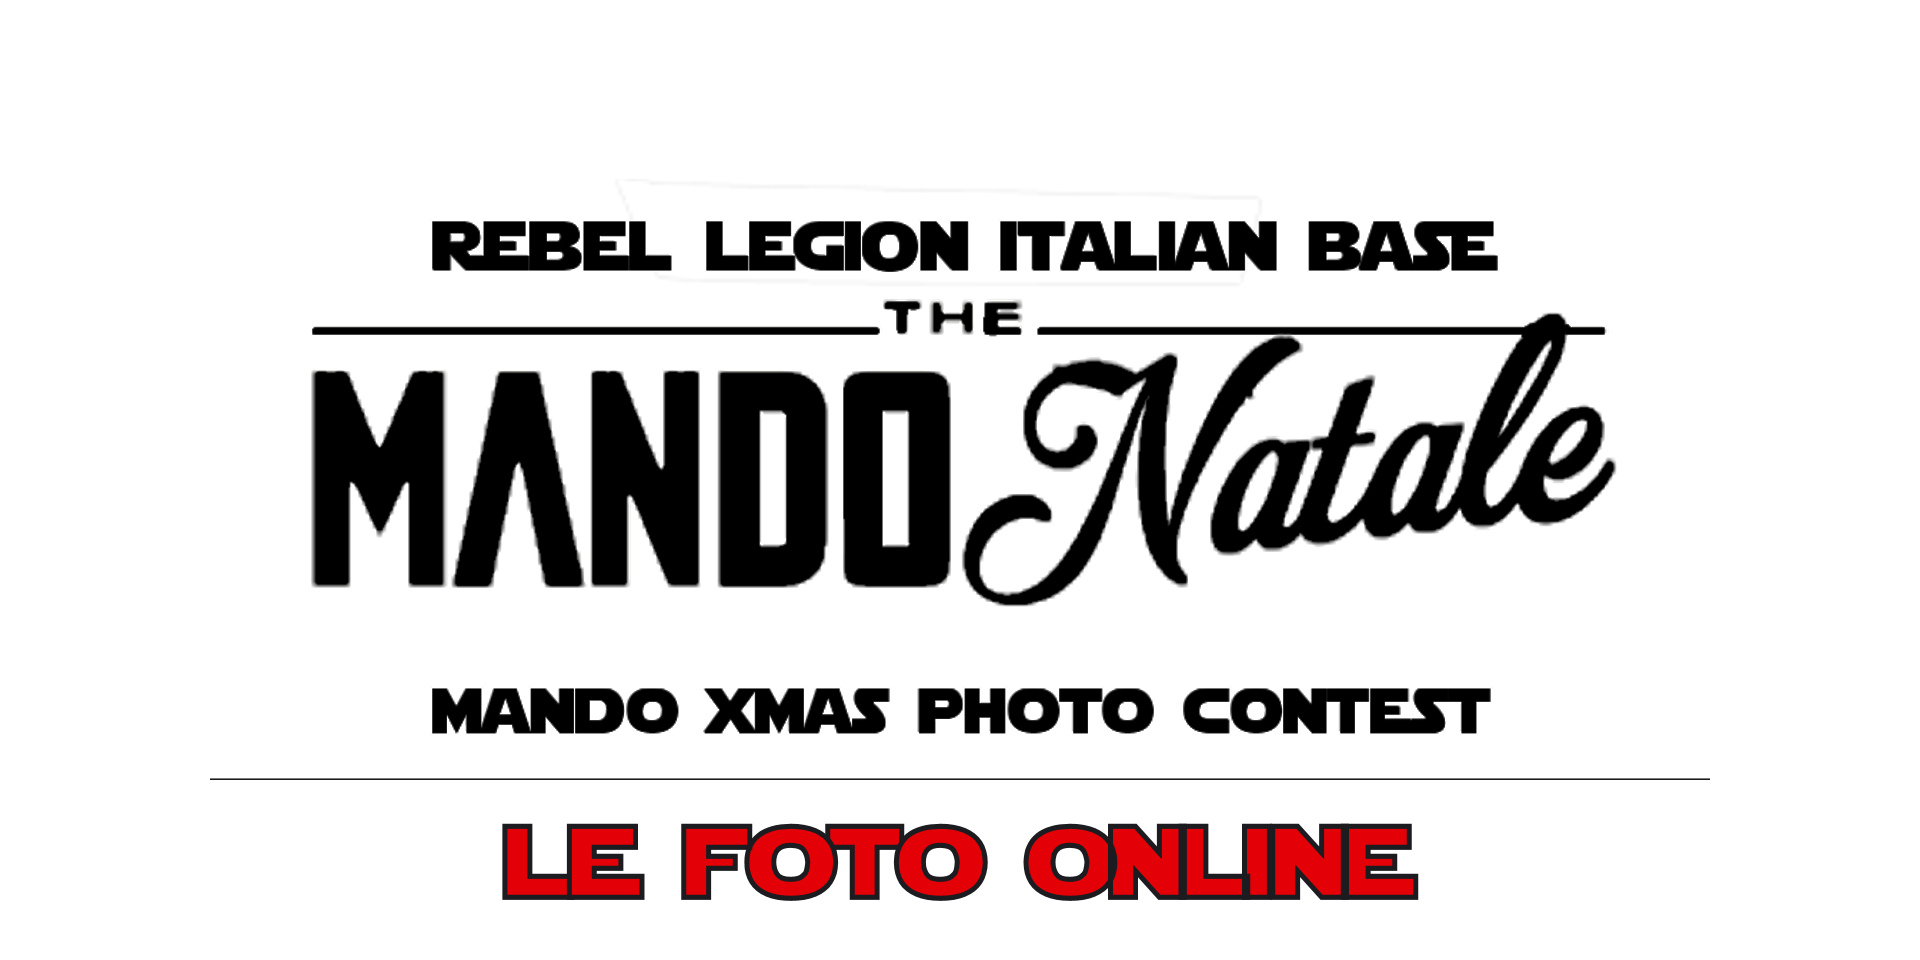 Foto Online – Mandonatale: Mando Xmas Photo Contest